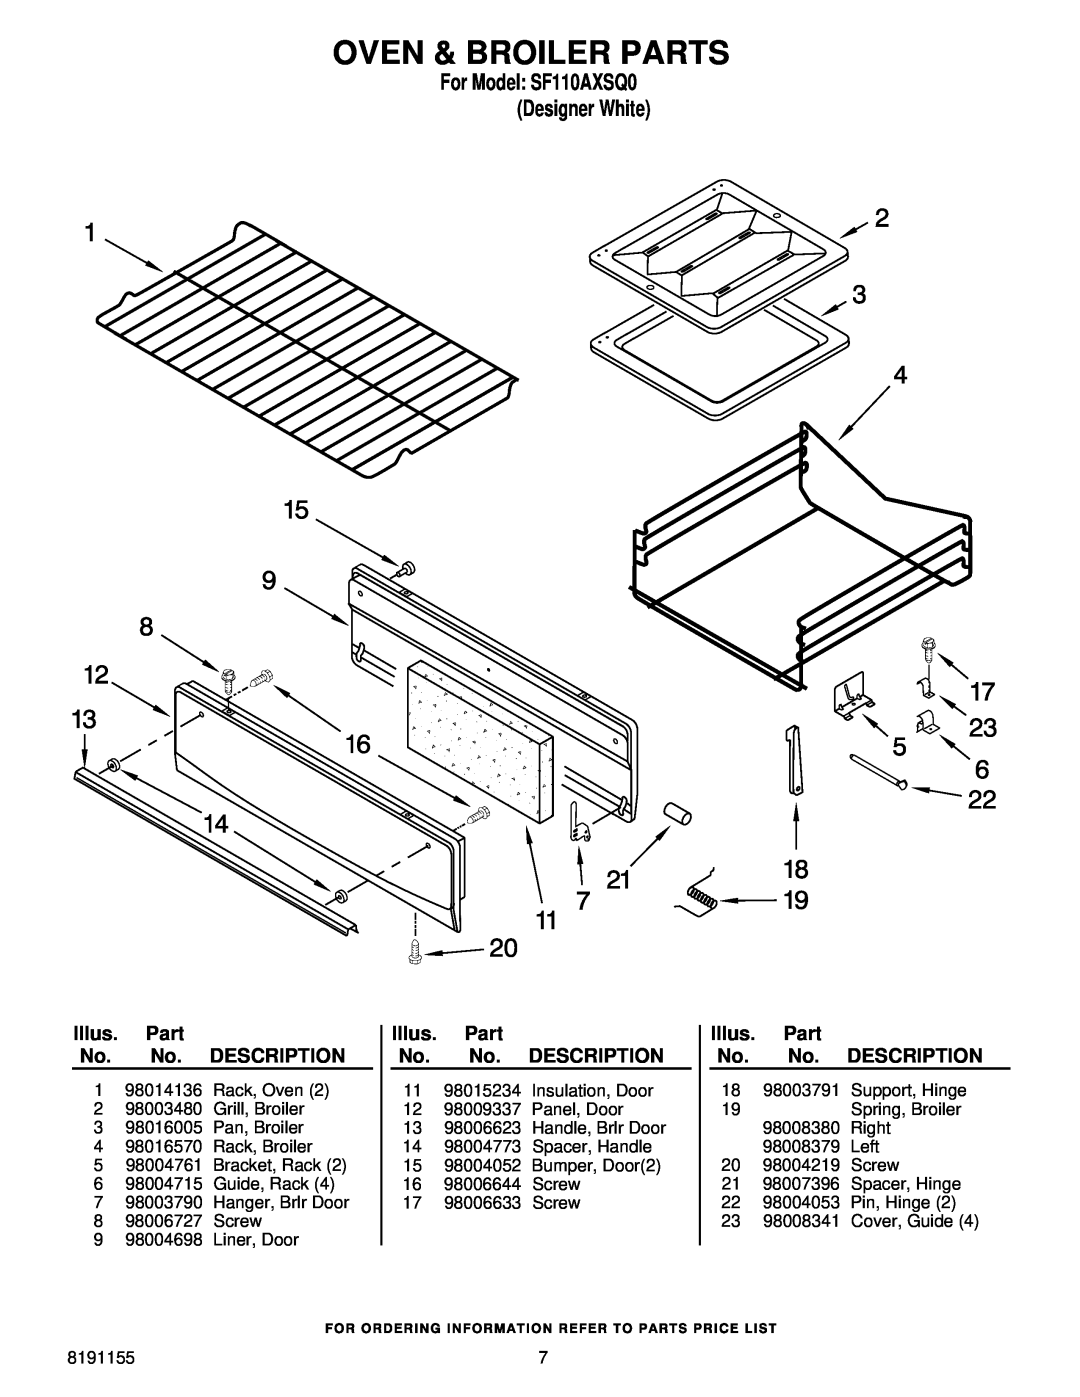 Whirlpool manual Oven & Broiler Parts, For Model: SF110AXSQ0 Designer White, Illus. Part No. No. DESCRIPTION 